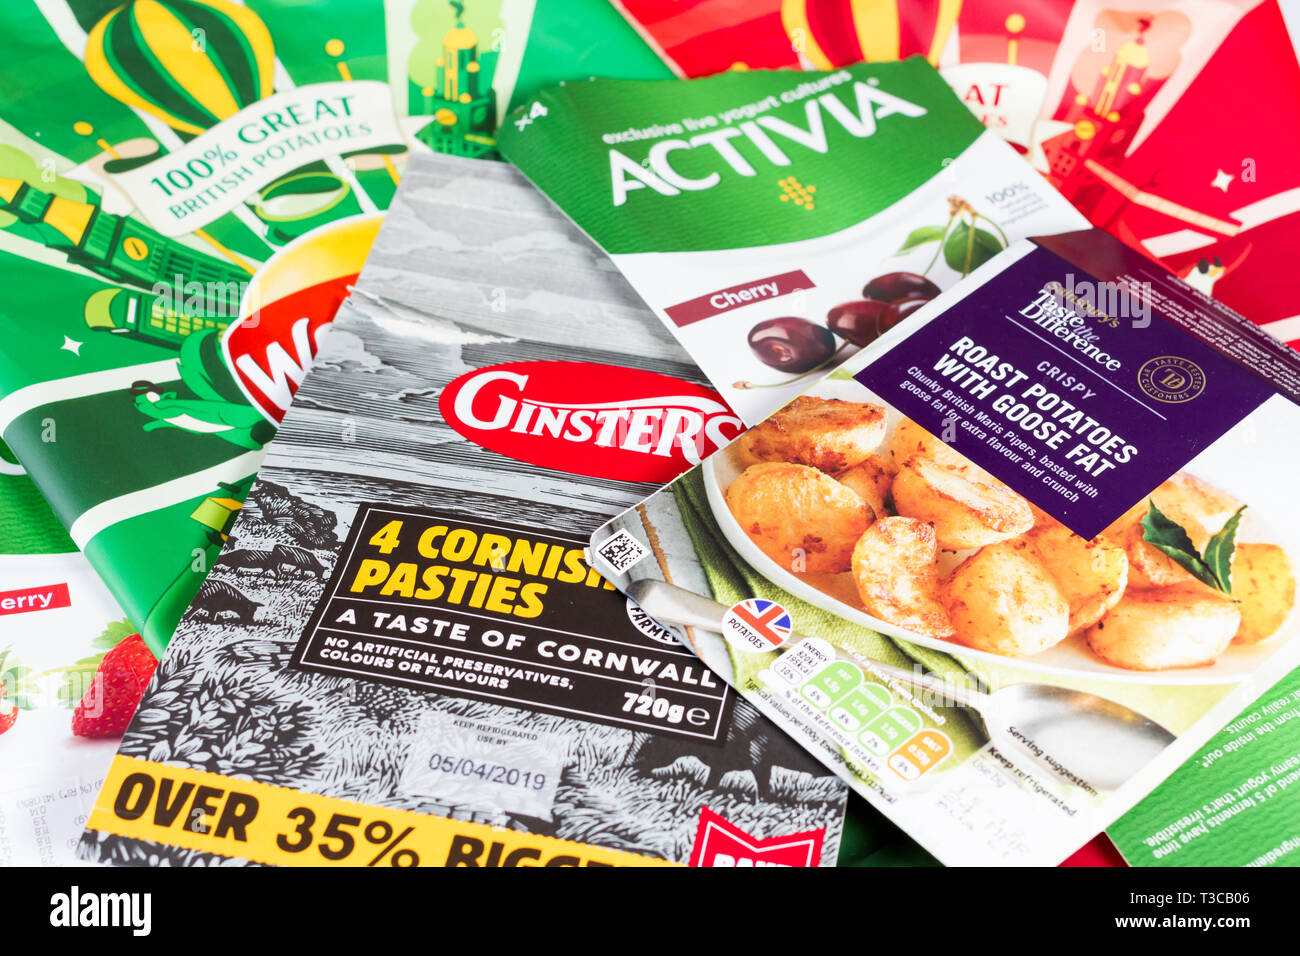 Food packaging, United Kingdom Stock Photo